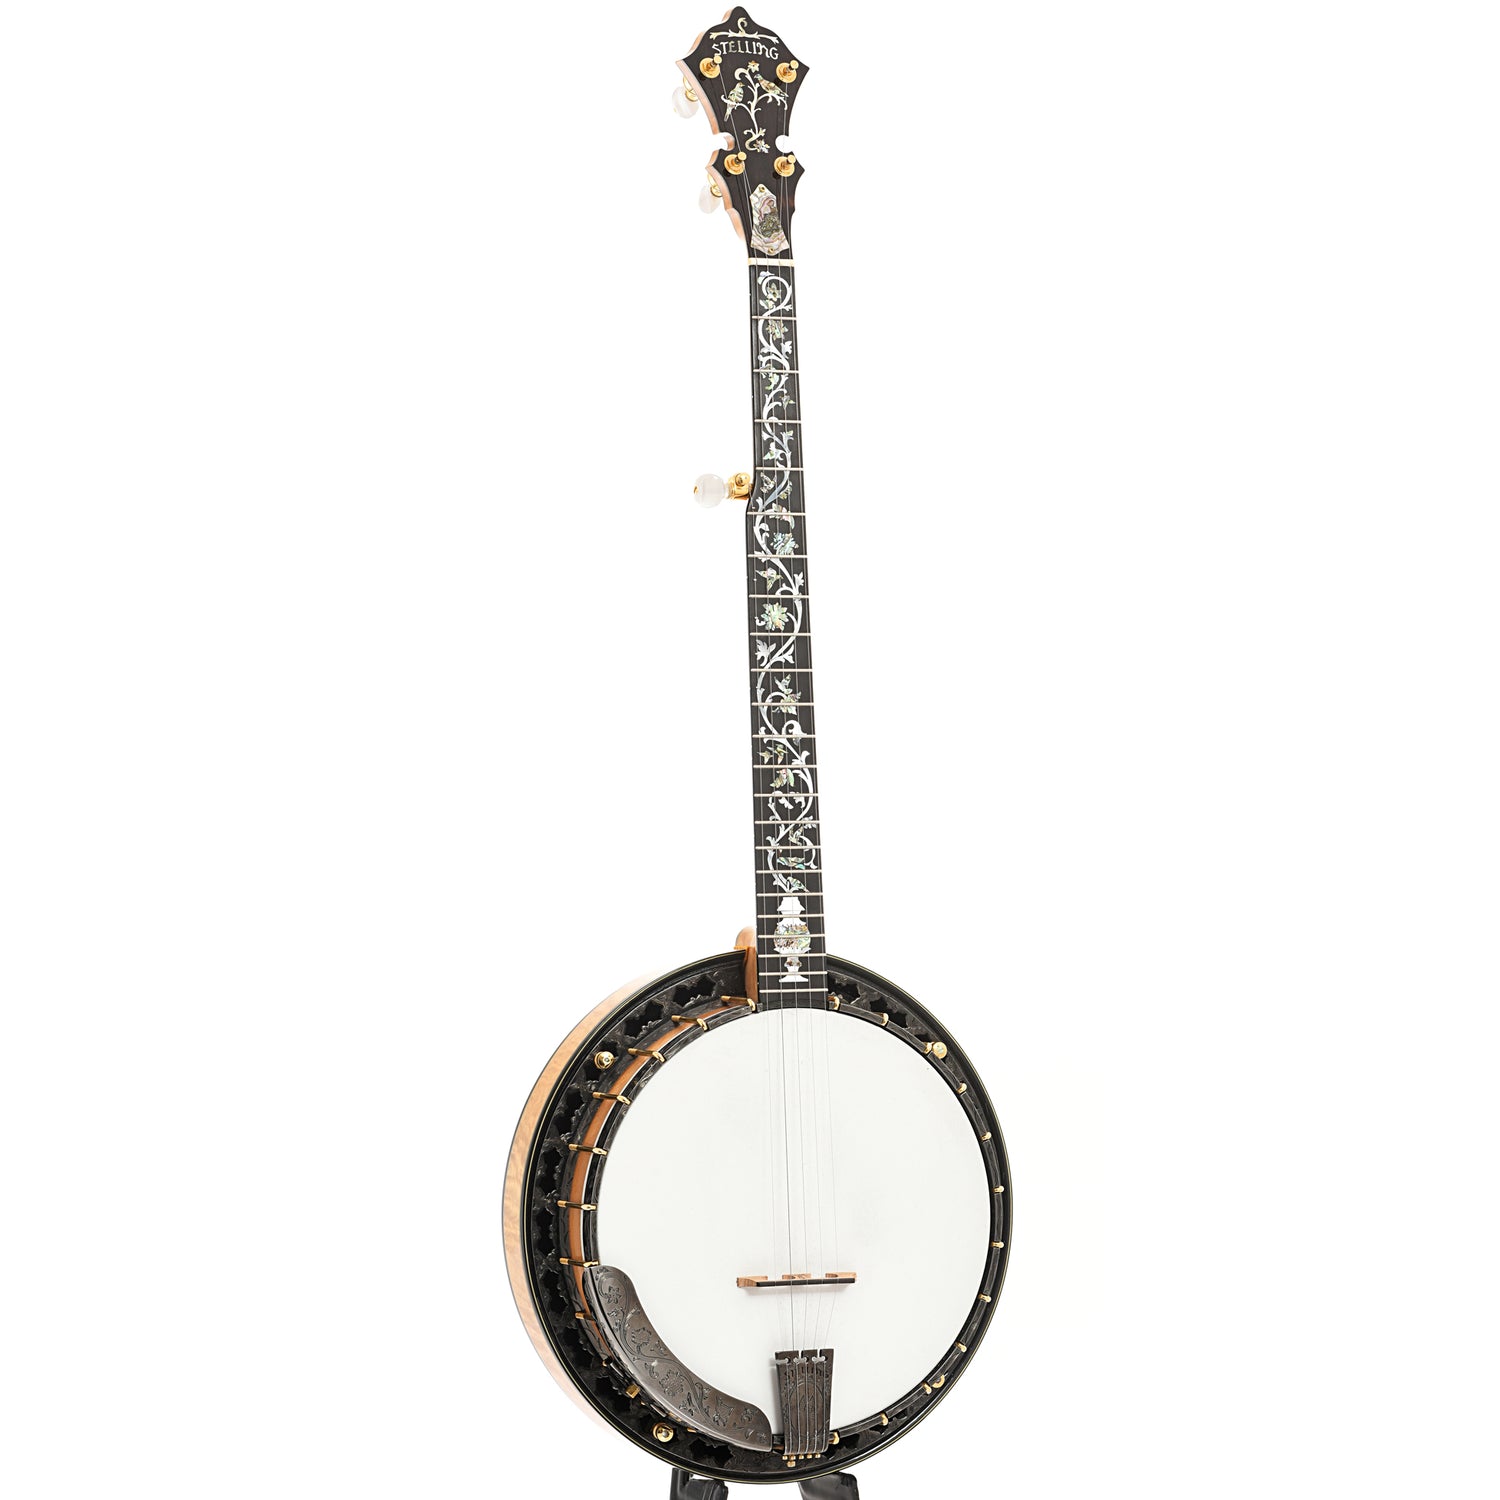 Full front and side of Stelling Tree of Life Custom Resonator Banjo